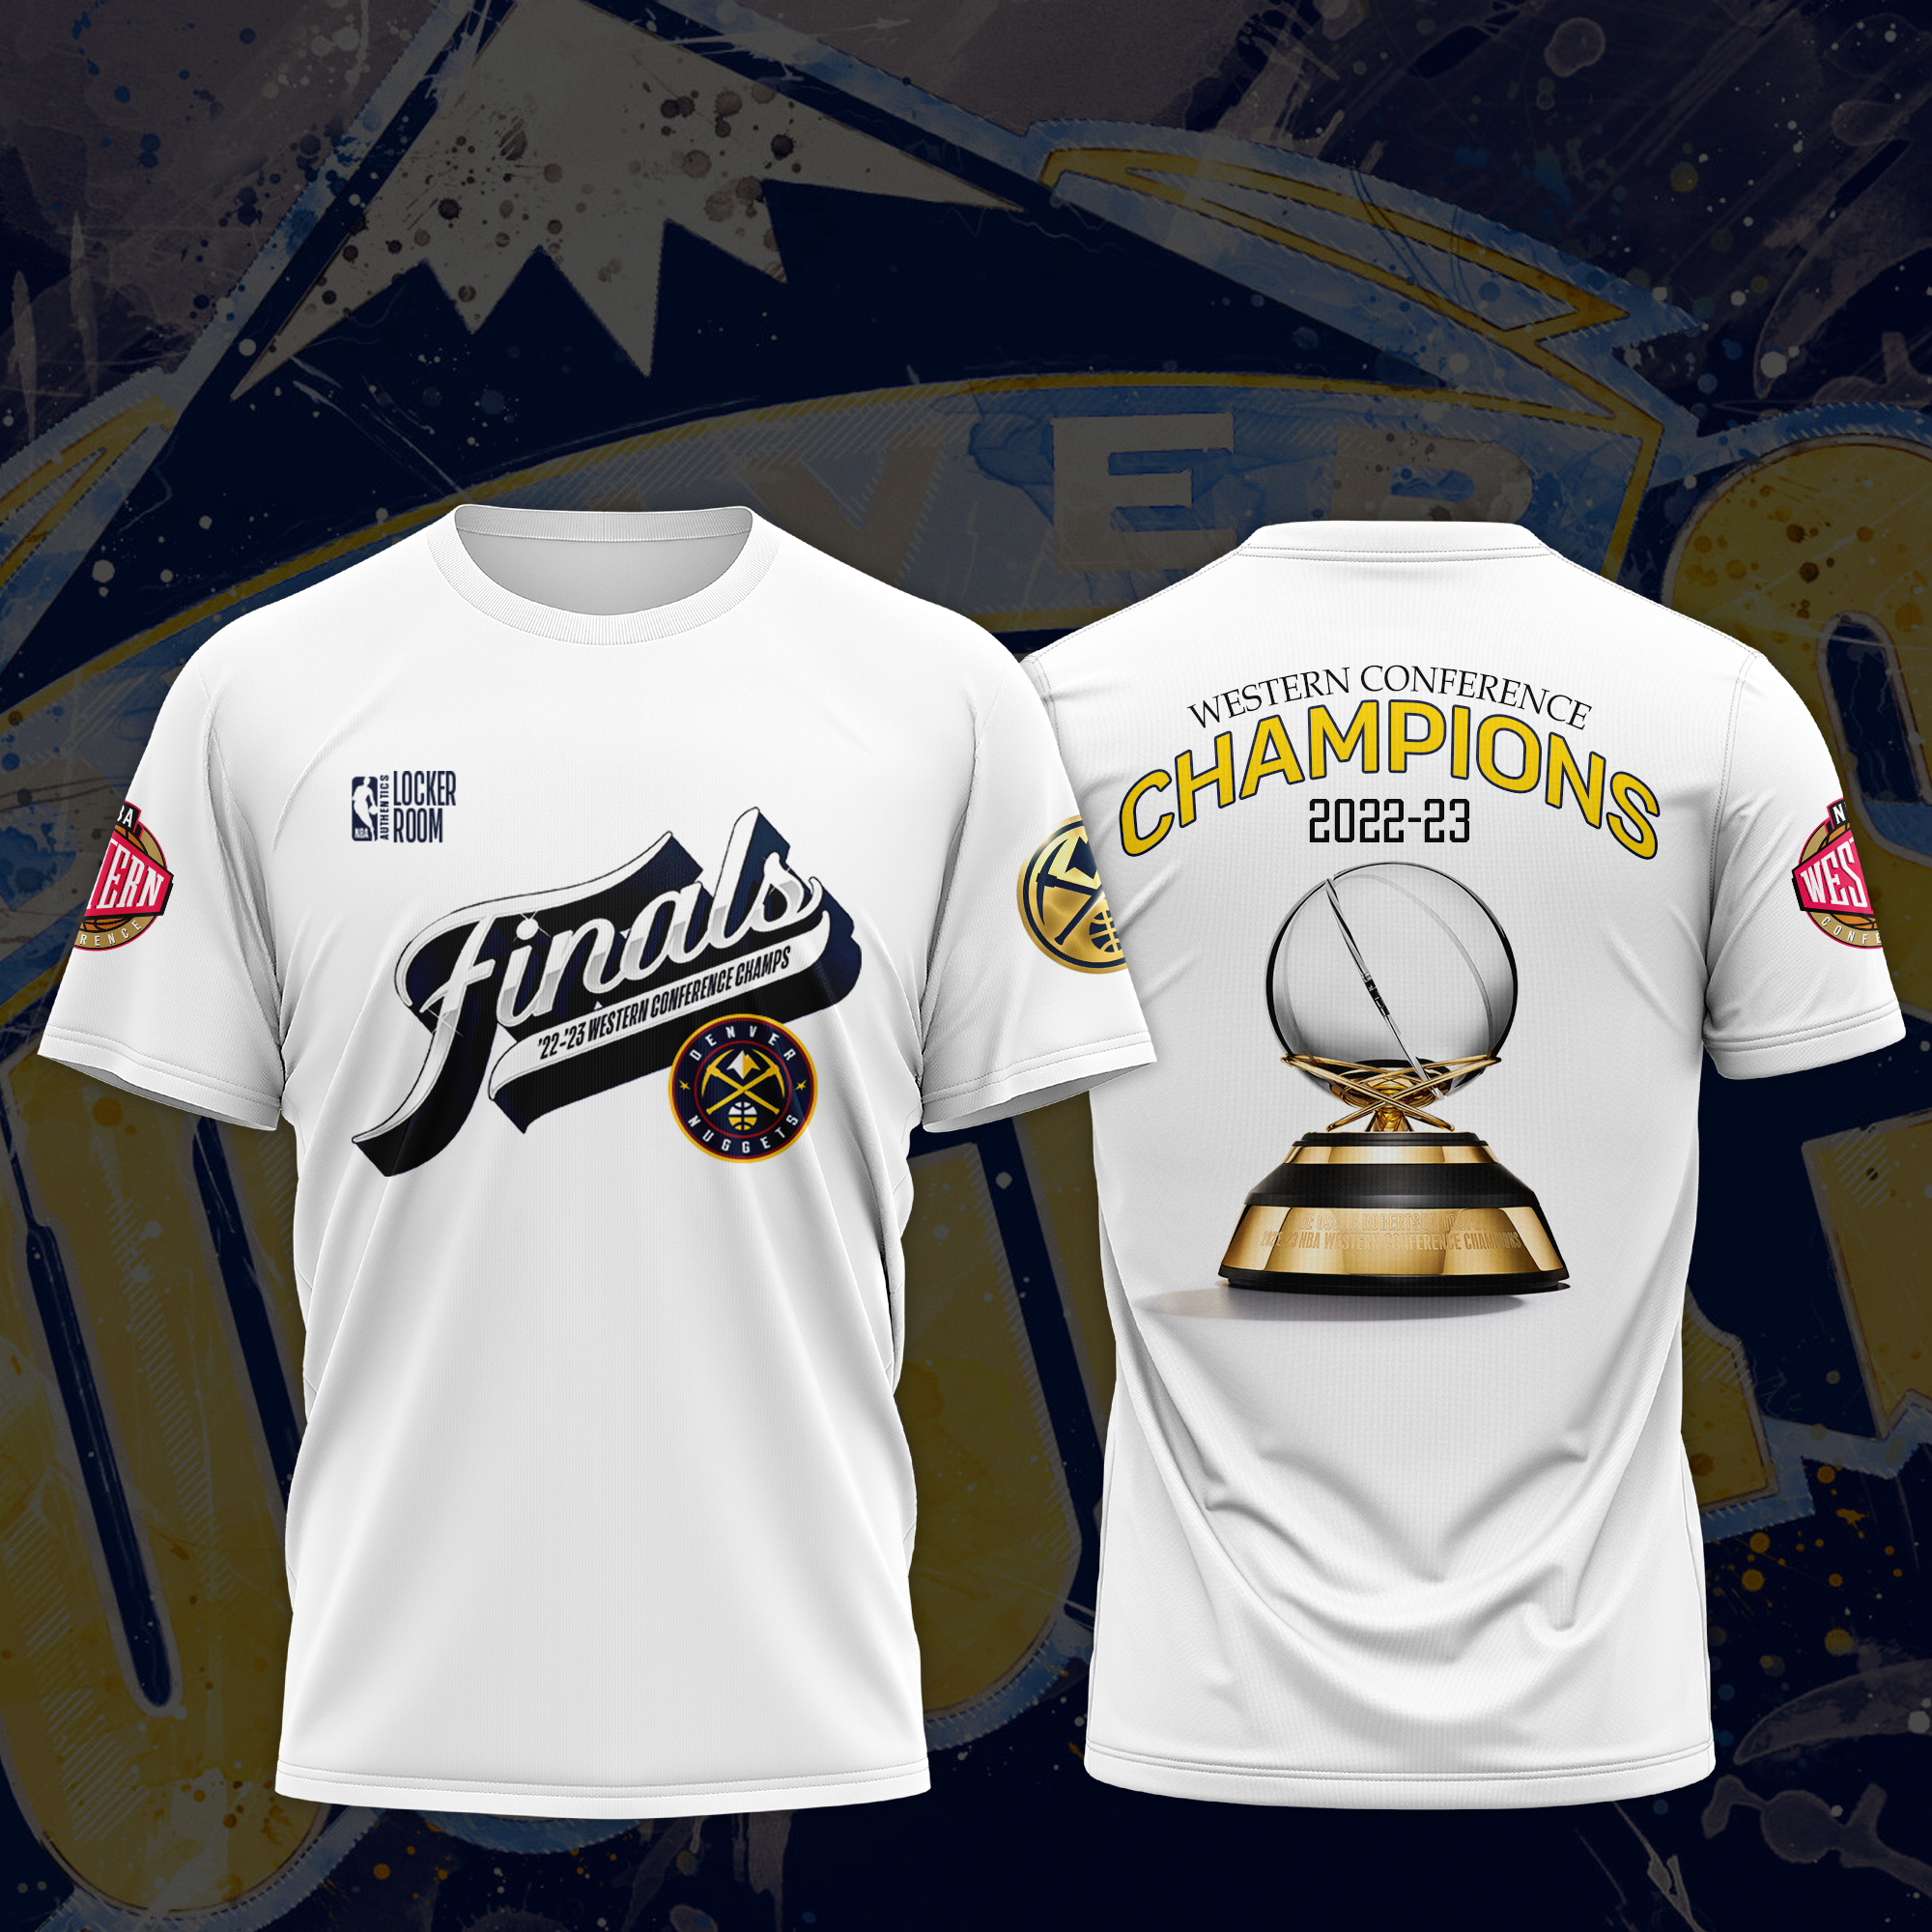 Men's Fanatics Branded White Golden State Warriors 2022 Western Conference Champions Locker Room T-Shirt